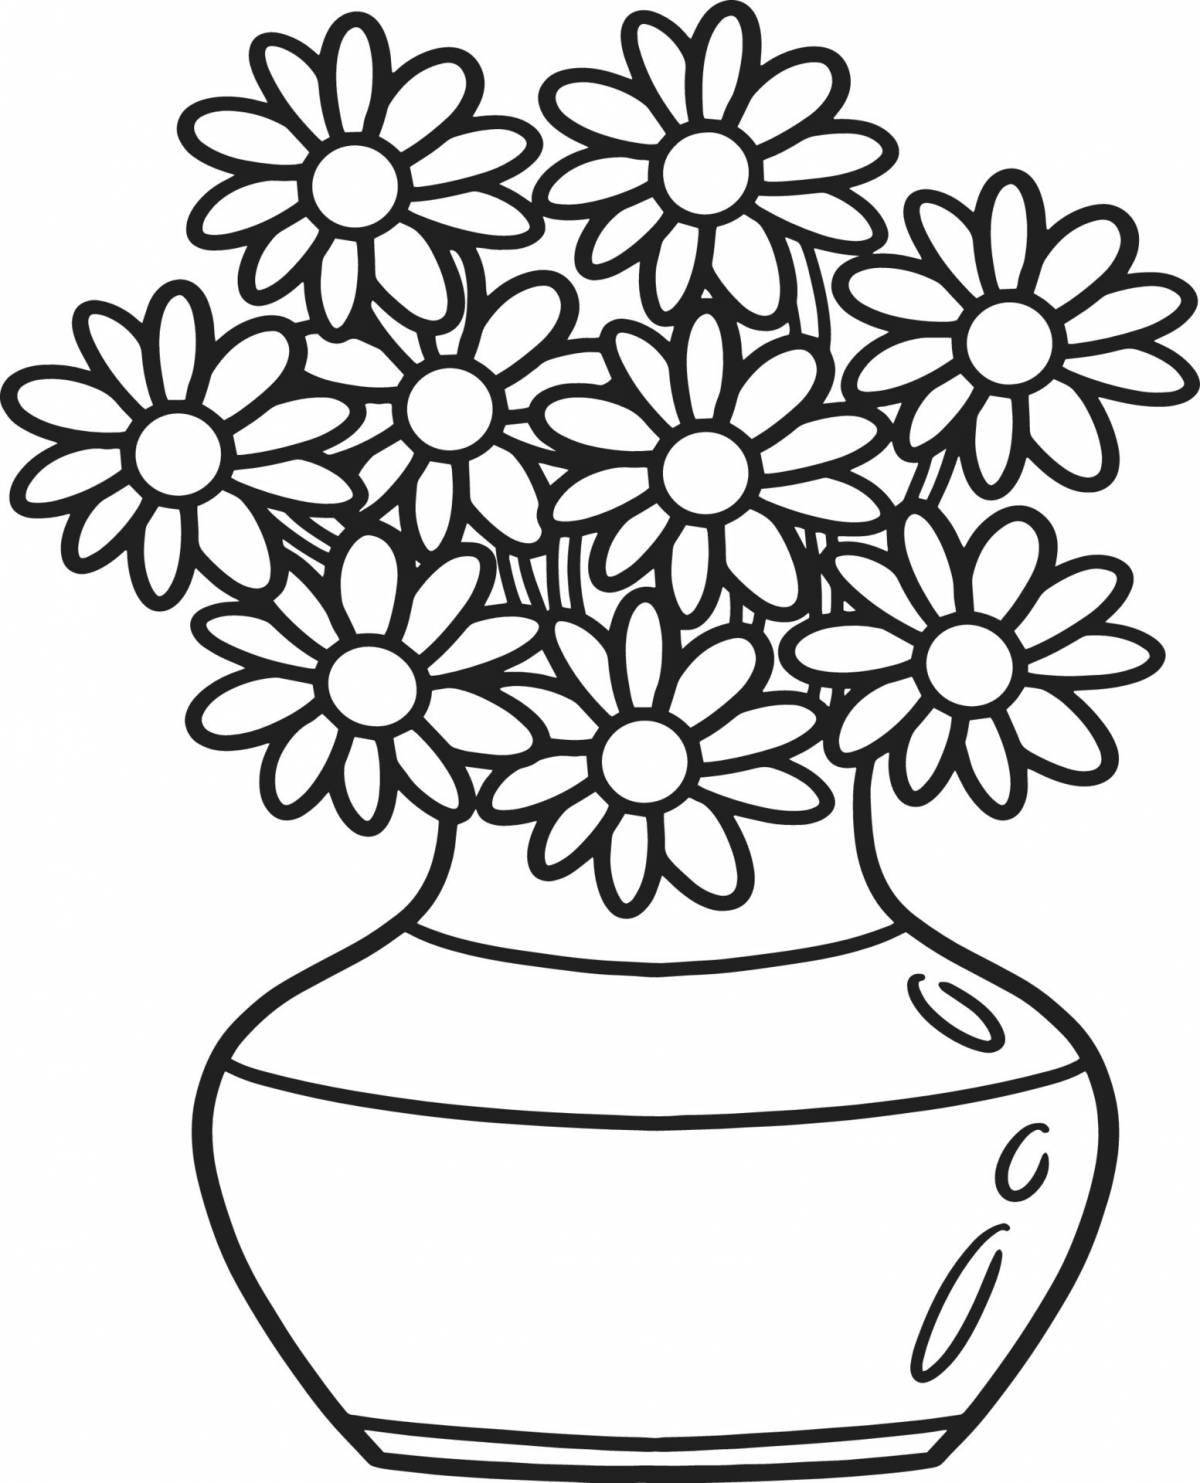 Playful flower vase for children 3-4 years old